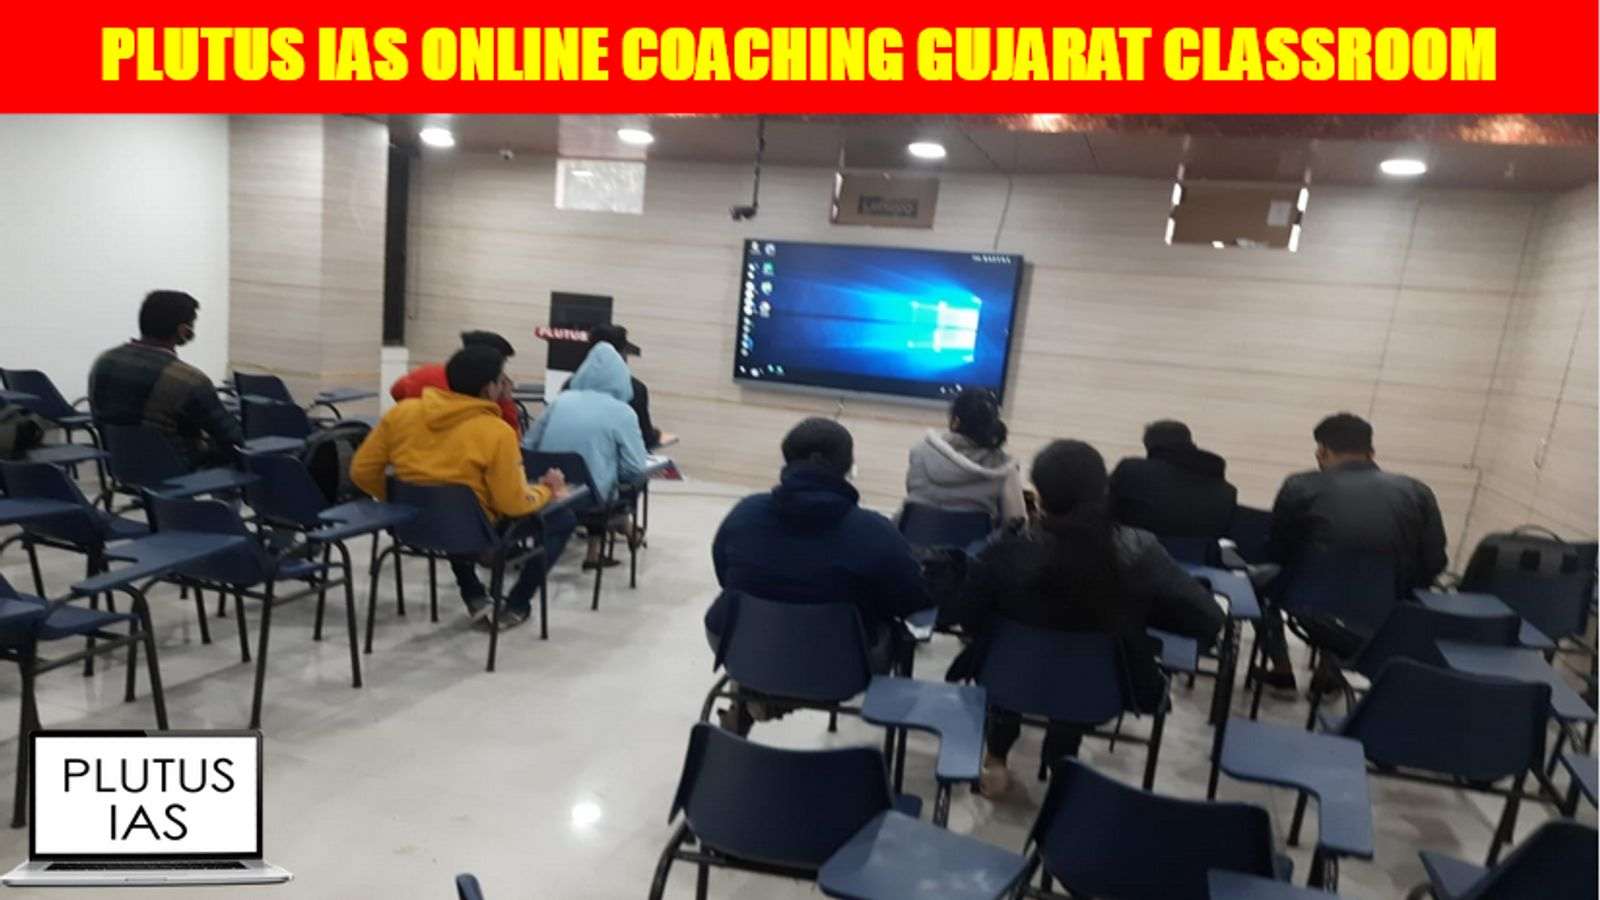 Plutus IAS Online Coaching Gujarat Class Room